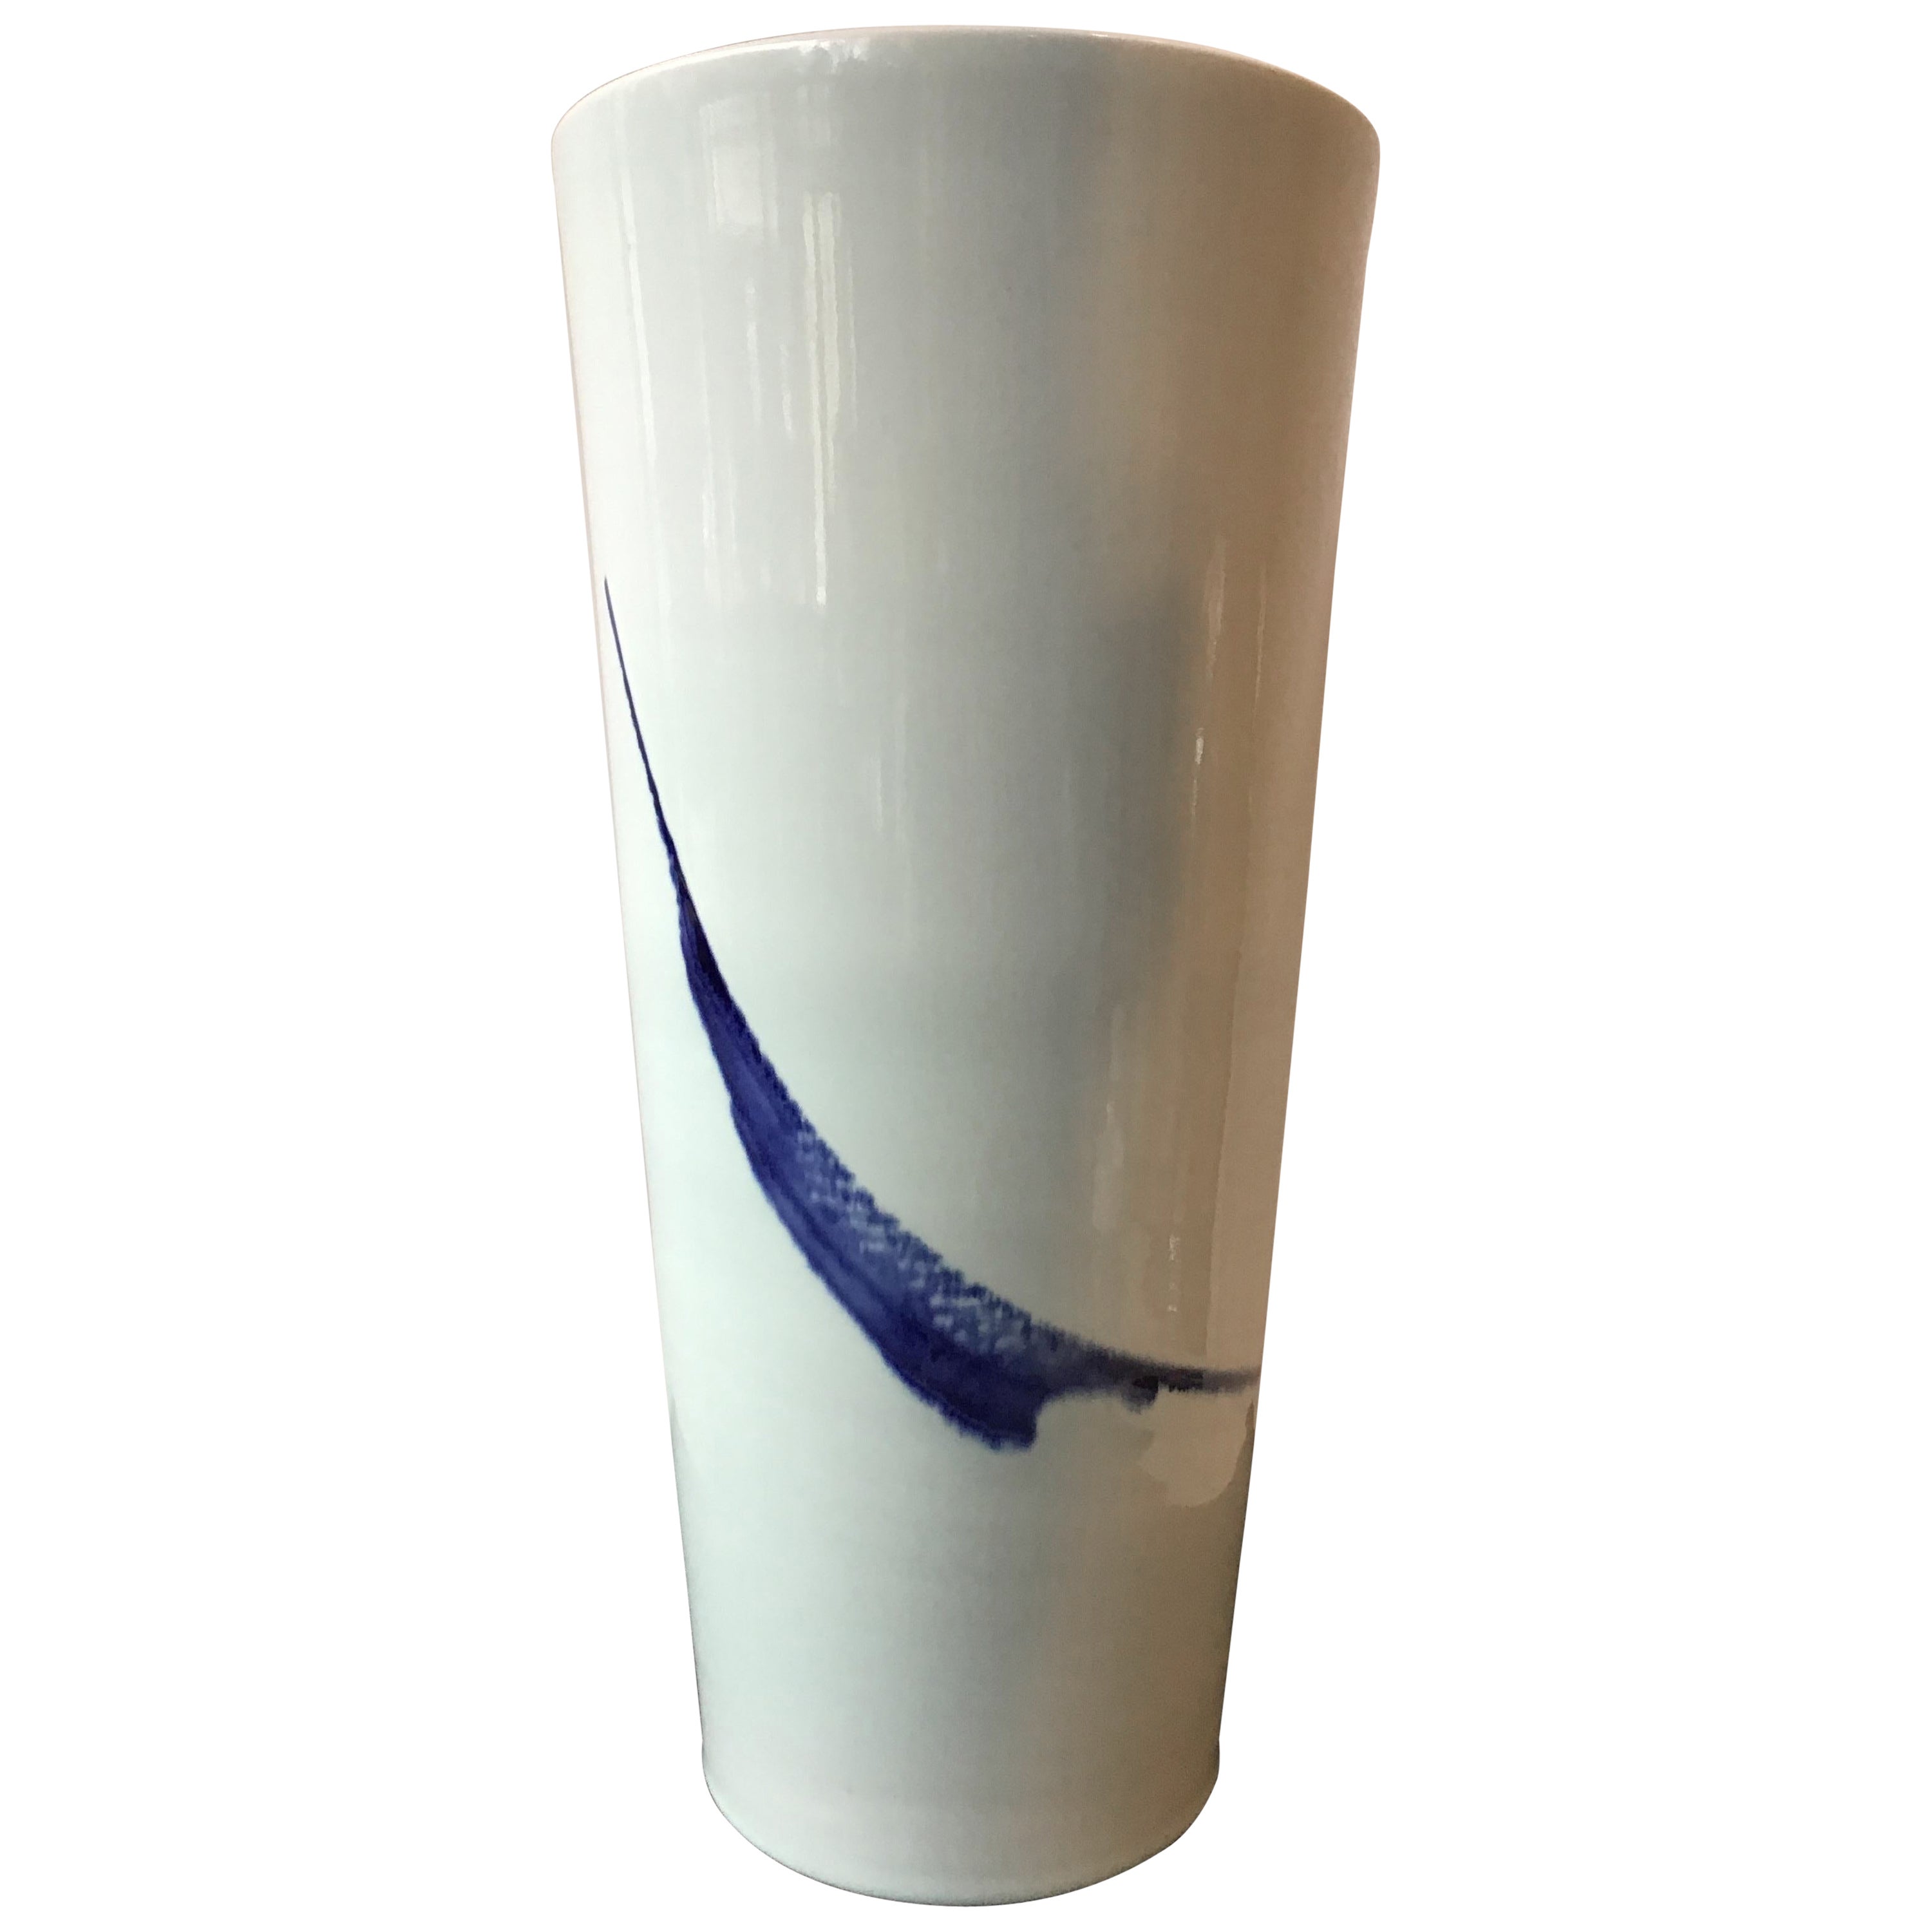 Large Spin Ceramics Vase with Blue Swirl